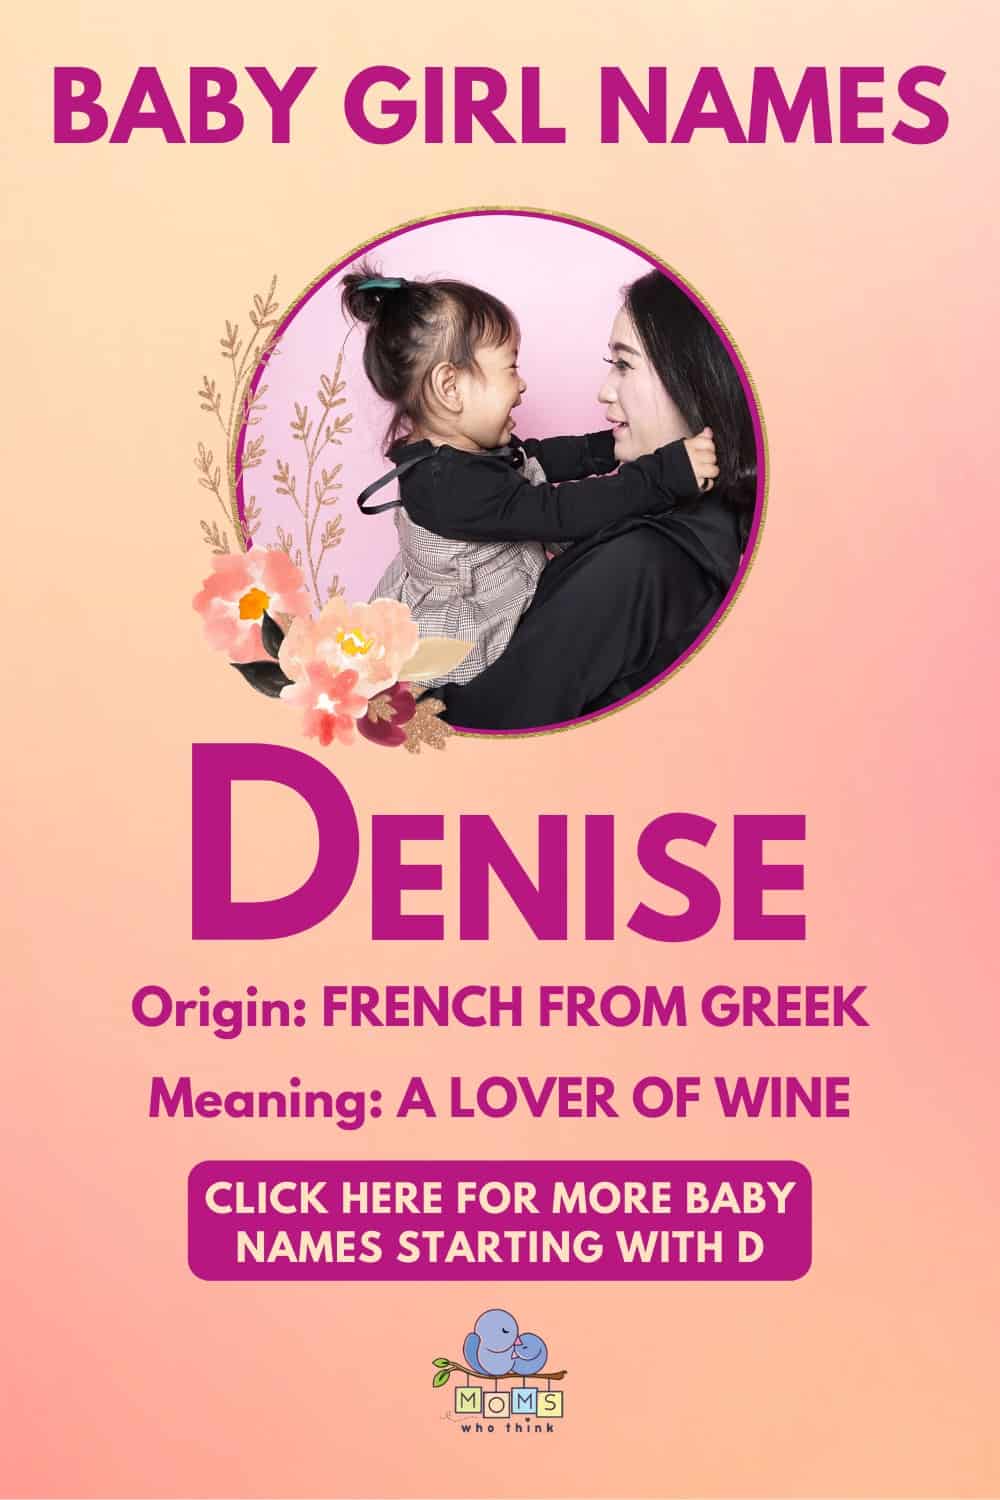 Baby girl name meanings - Denise